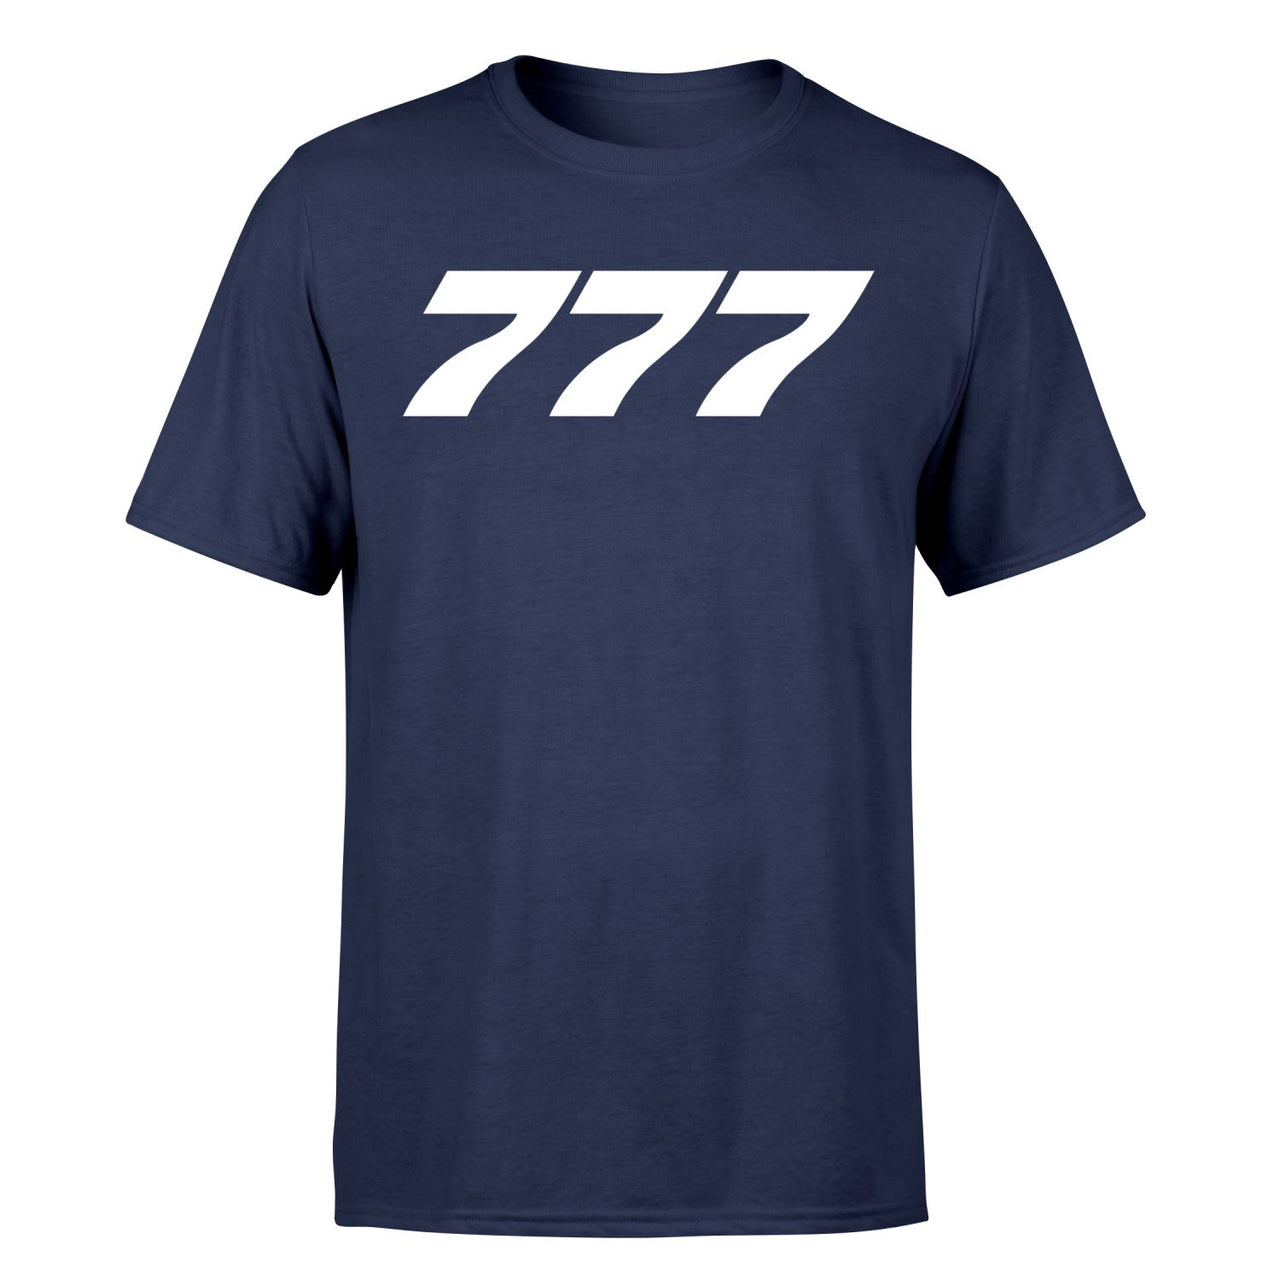 777 Flat Text Designed T-Shirts